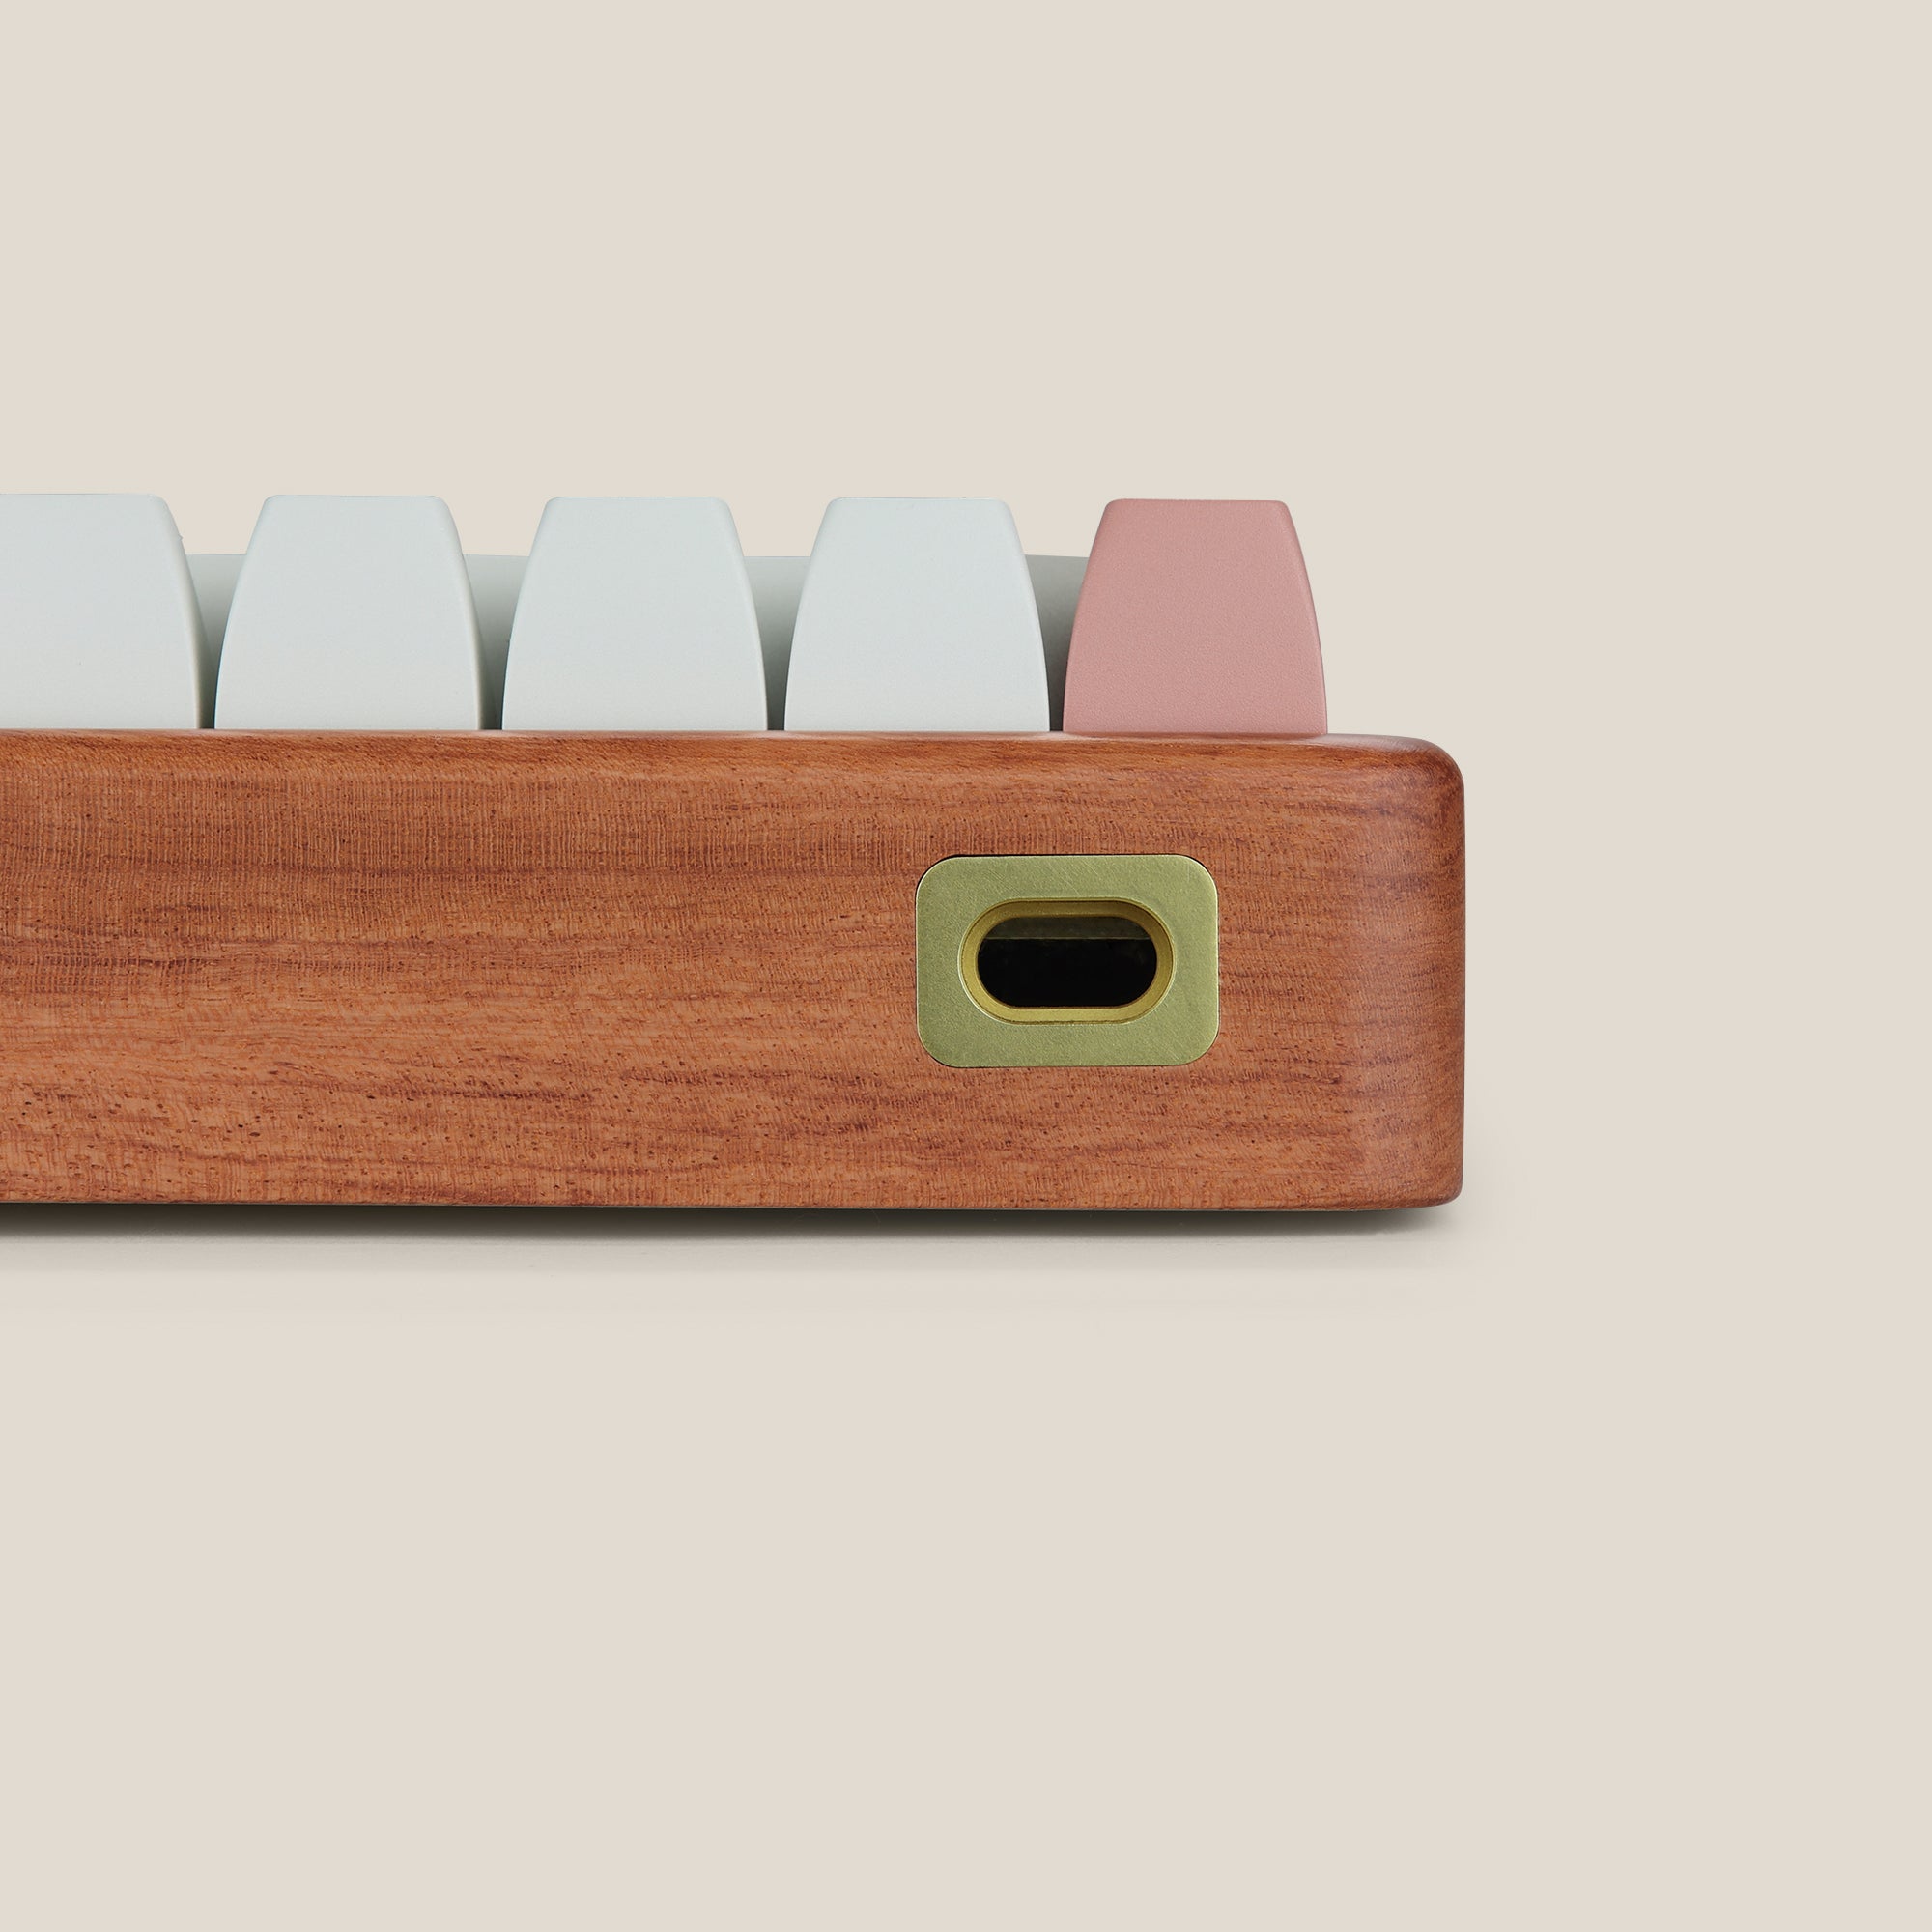 KBDfans Custom Keyboard 65% Wooden Case and Wrist